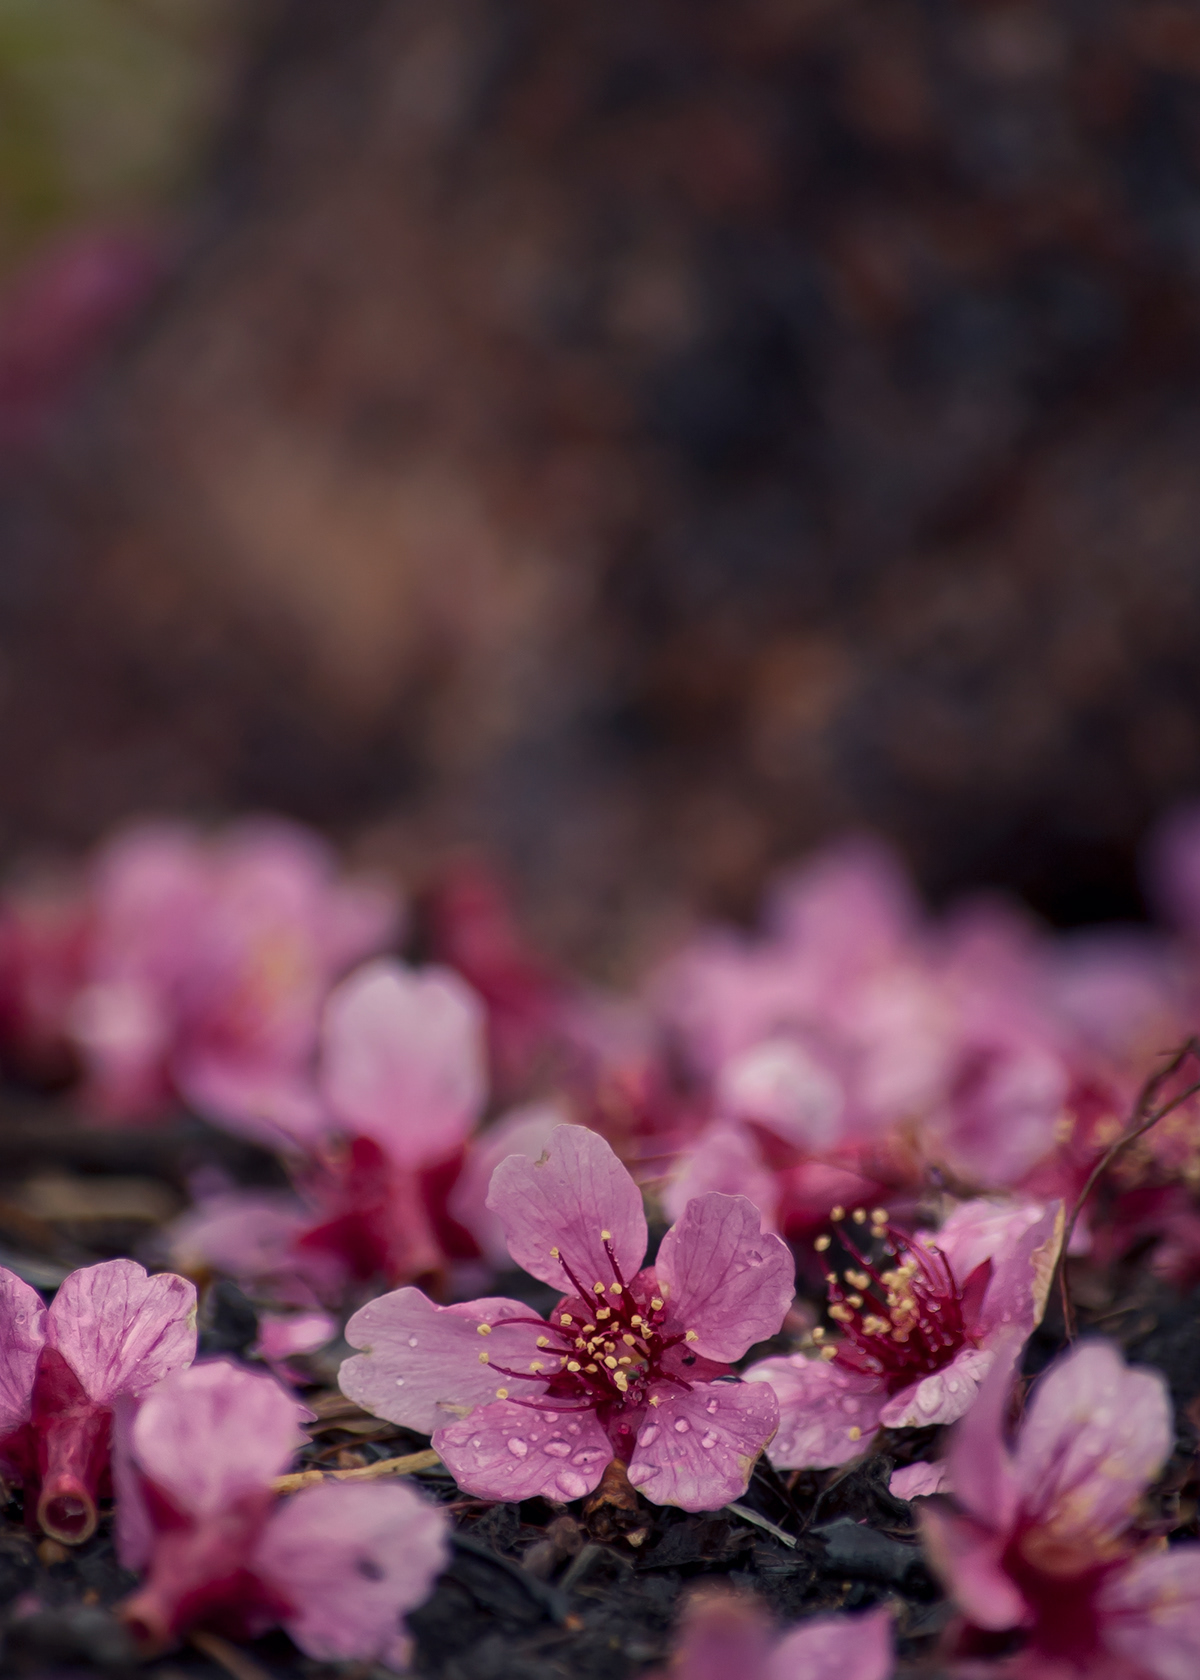  Plants  nature  botanical foliage  trees  Leaves  flowers   blooms  biology  dogwood  oak  anemone  ferns  mayapple  cherry